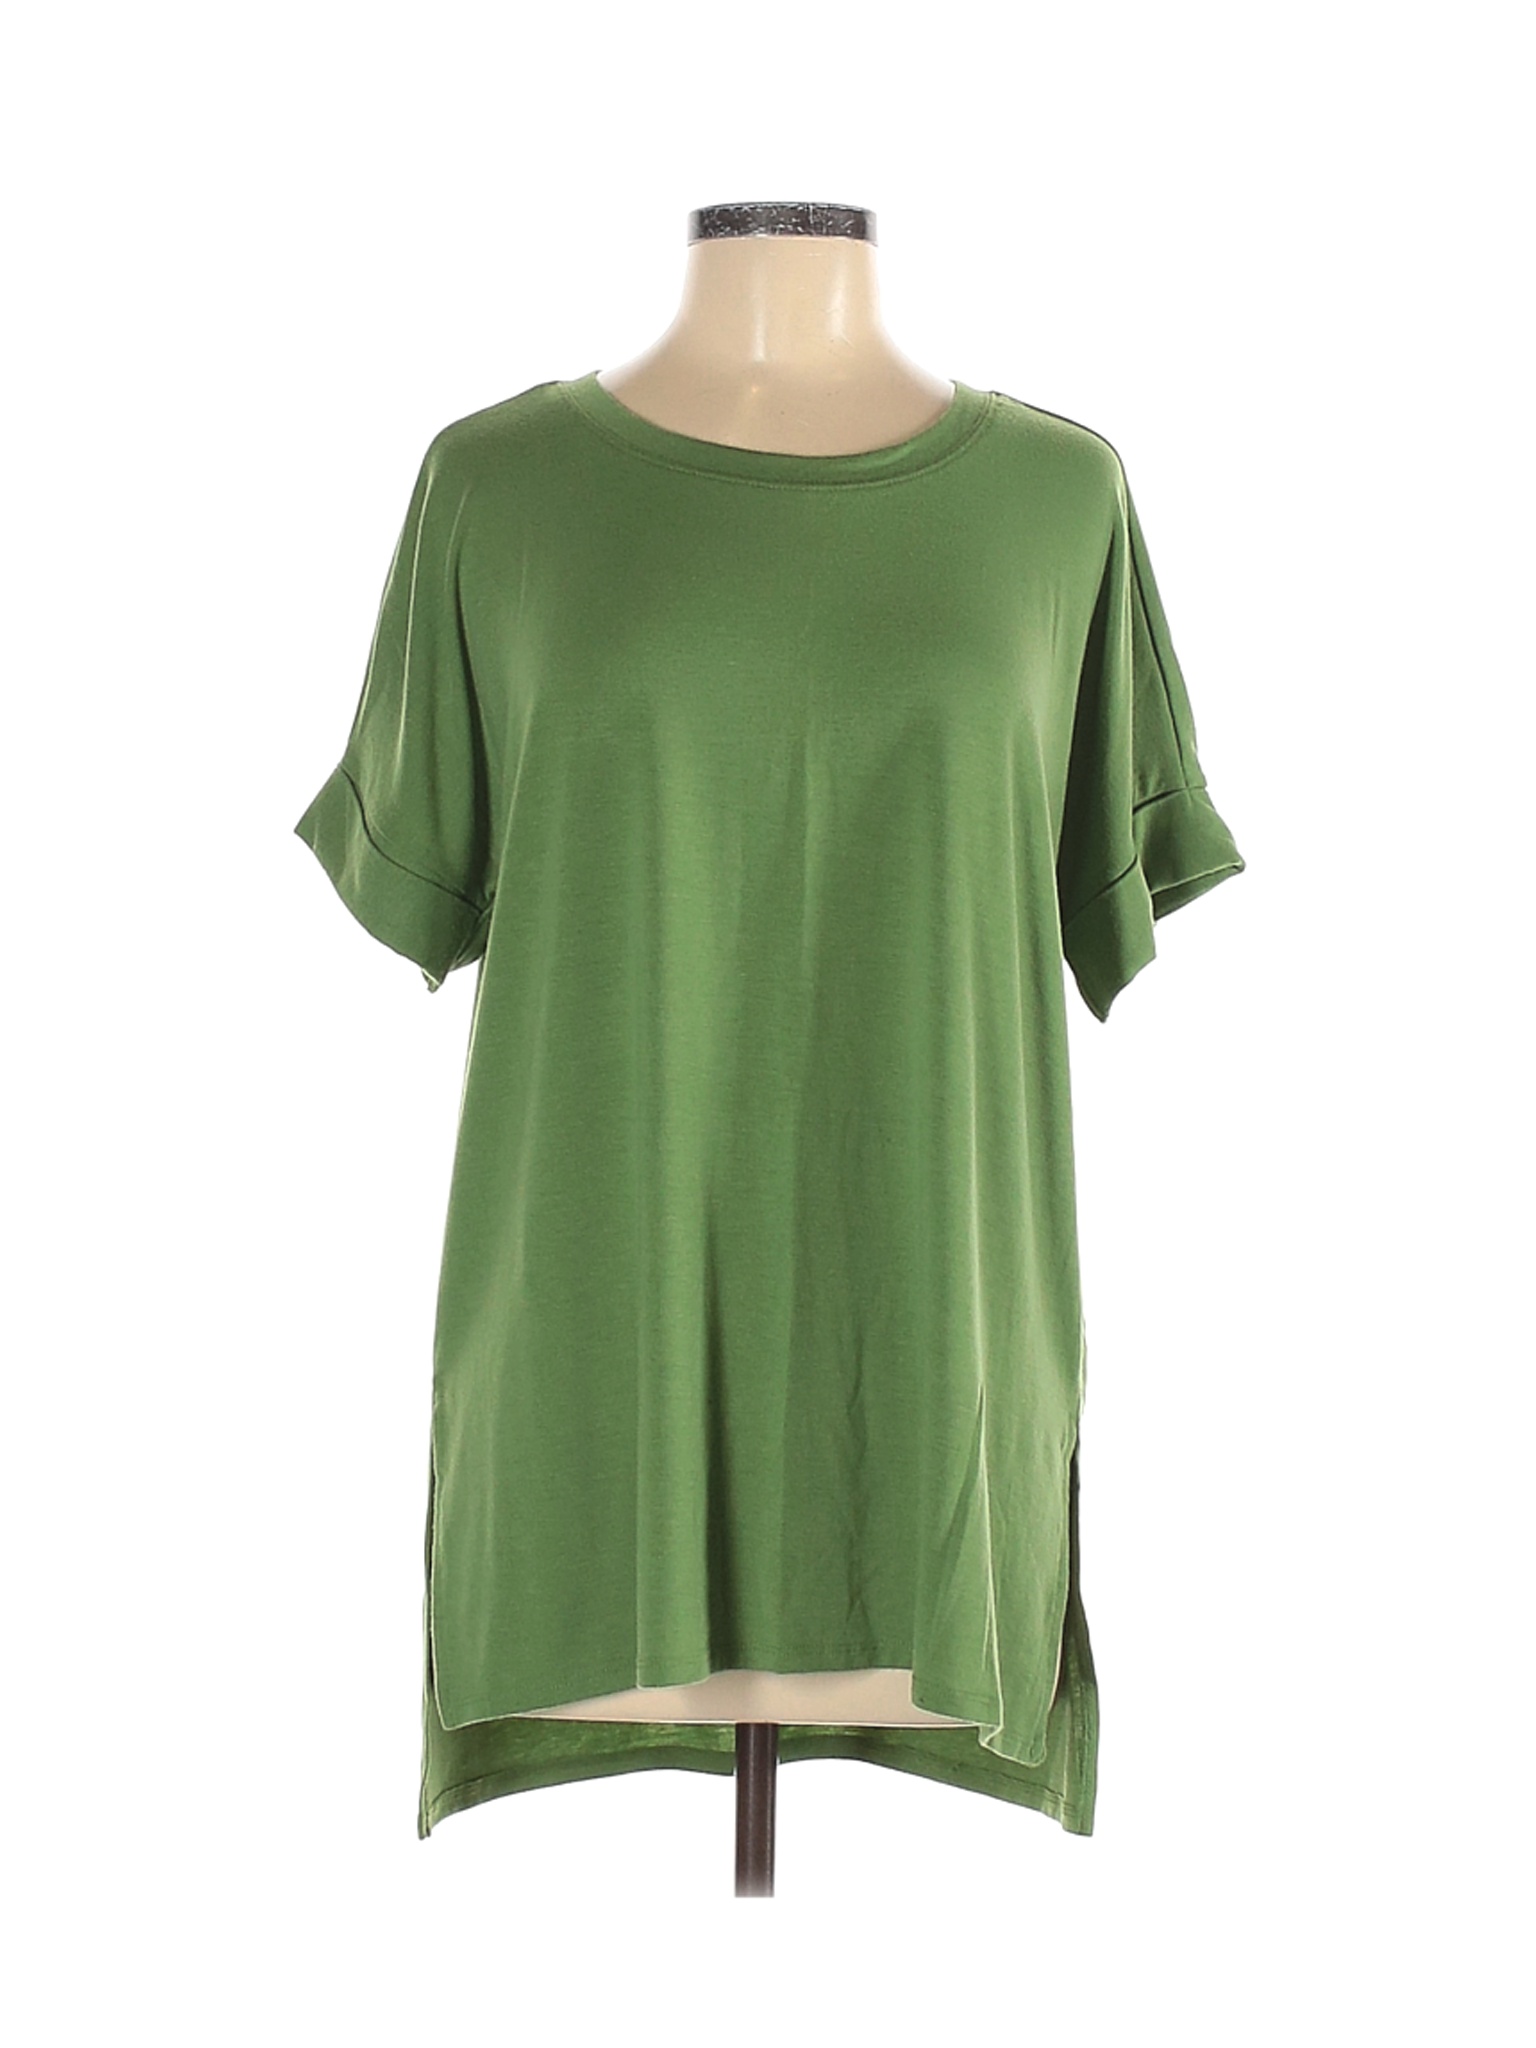 Zenana Premium Solid Green Short Sleeve T-Shirt Size M - 41% off | thredUP